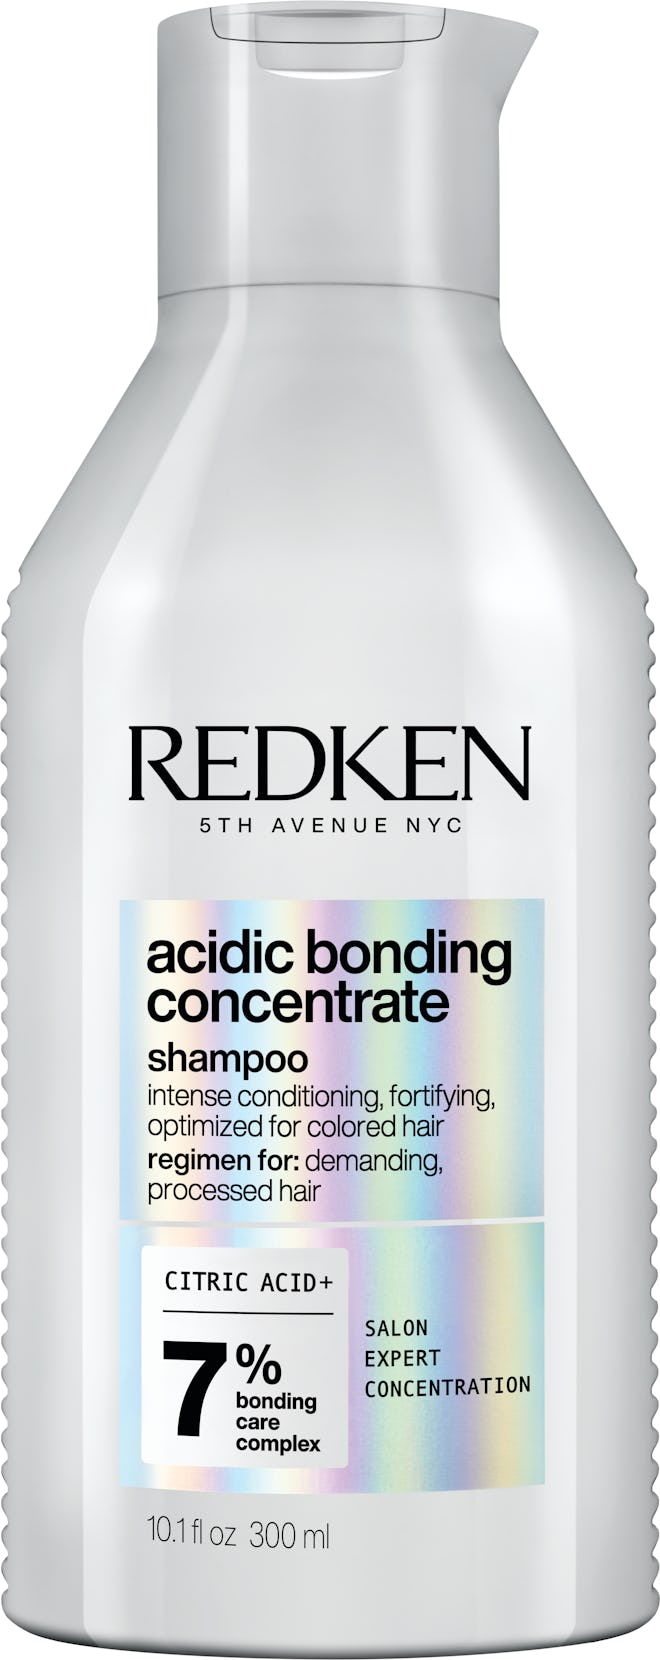 Redken Acidic Bonding Concentrate Shampoo and Conditioner 